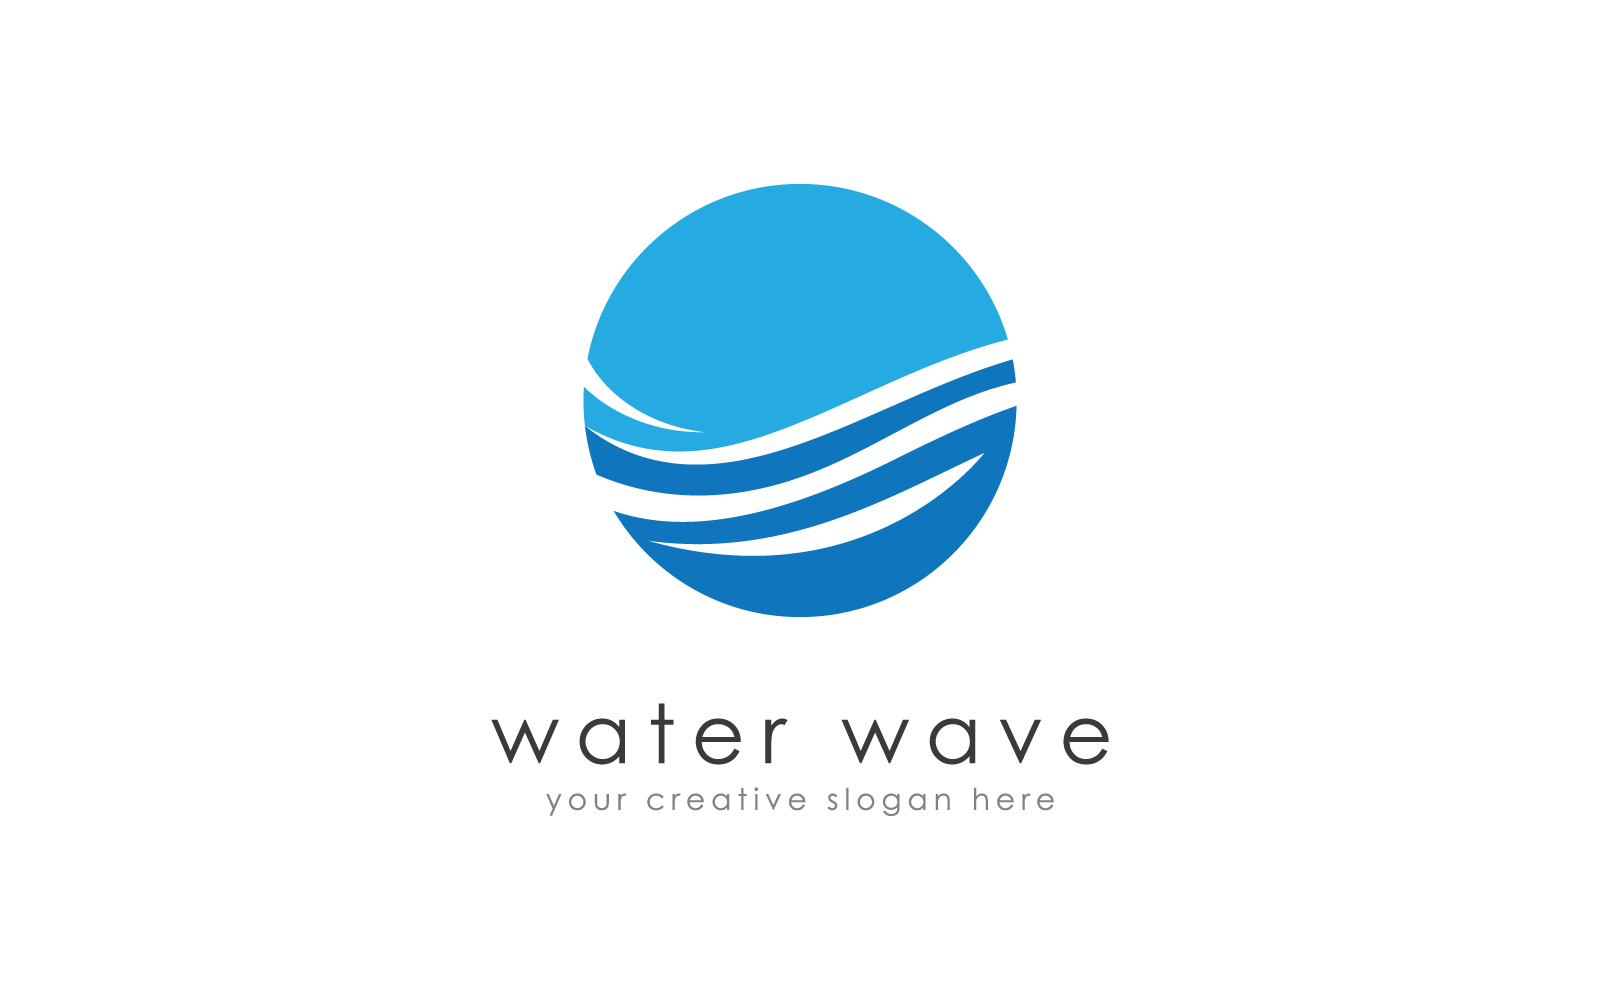 Water Wave design illustration logo template vector